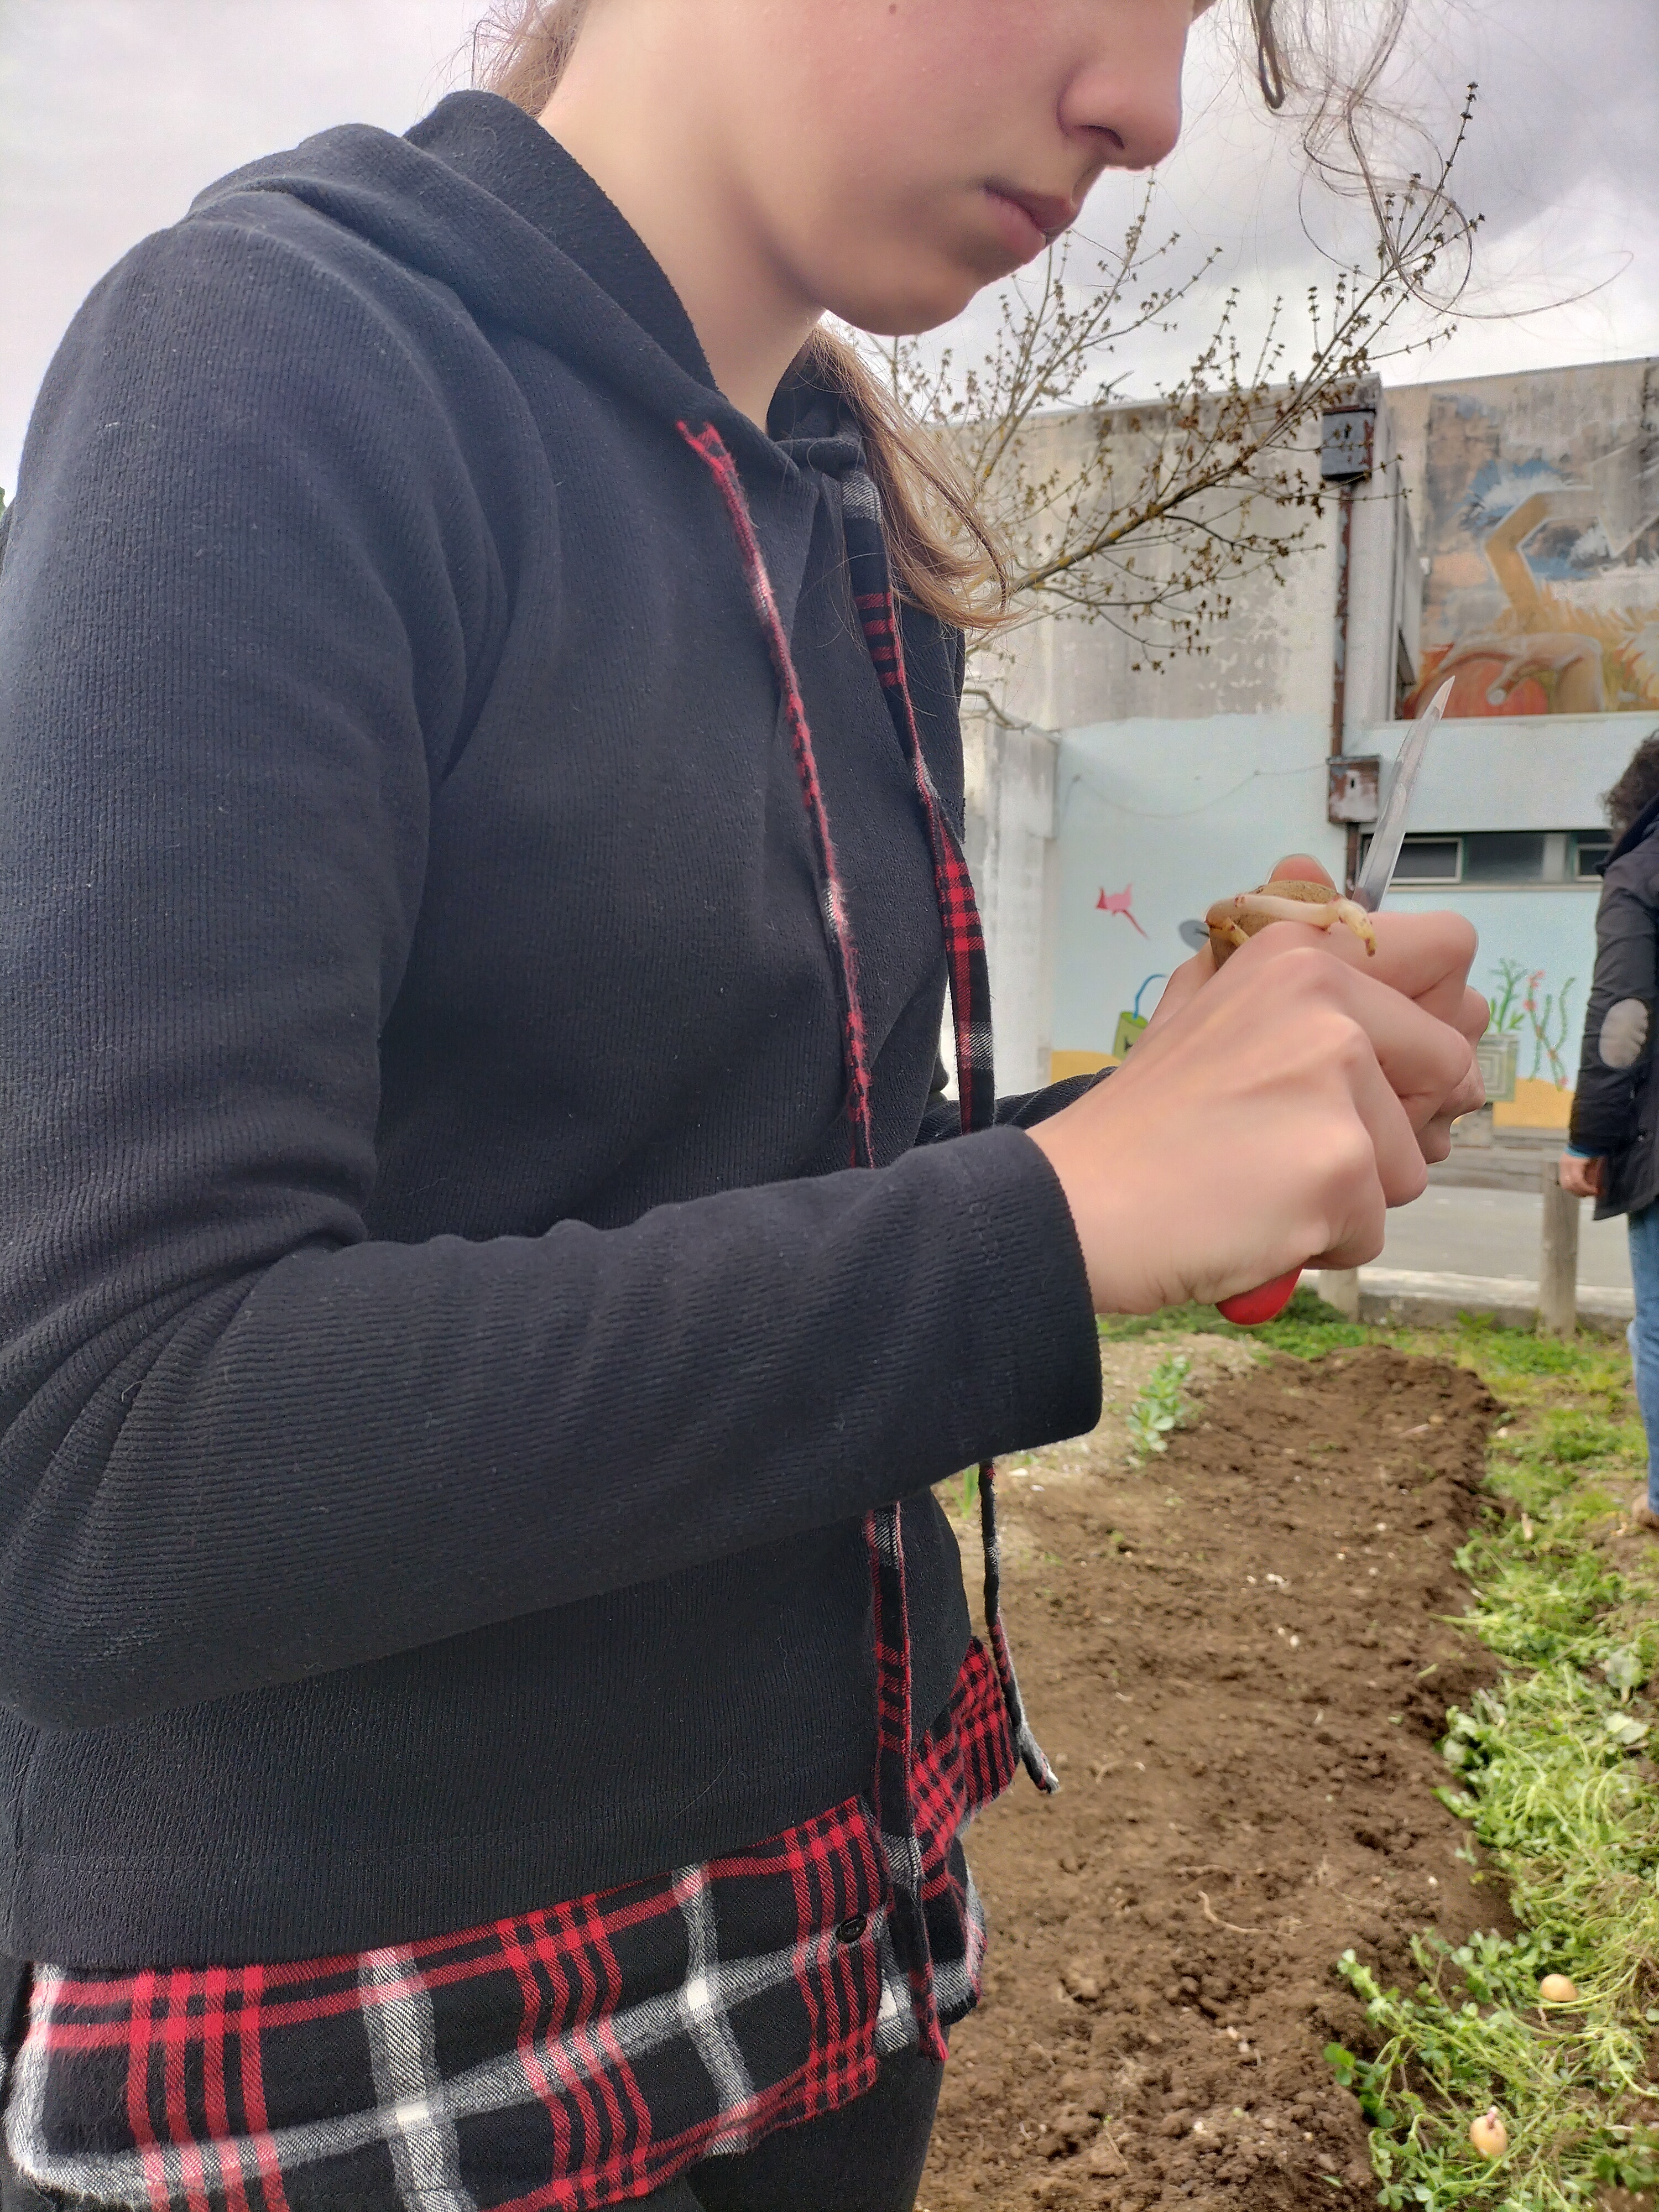 Os alunos aprendem a cortar a batata para plantar